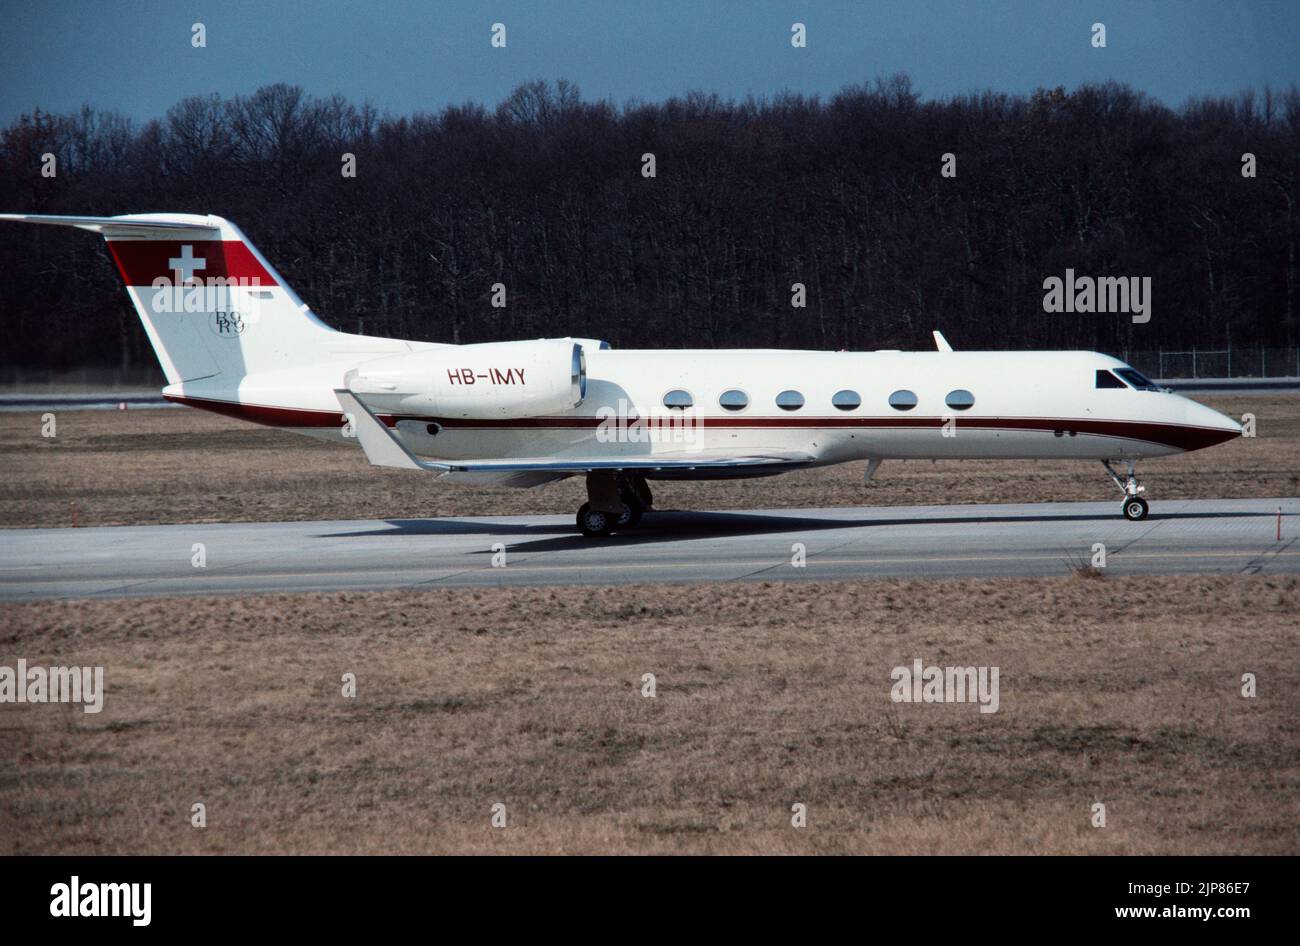 A Gulfstream Aerospace, Grumman, Gulfstream G-IV, Business, private, corporate, executive, Jet, registered in Switzerland as HB-IMY. Stock Photo